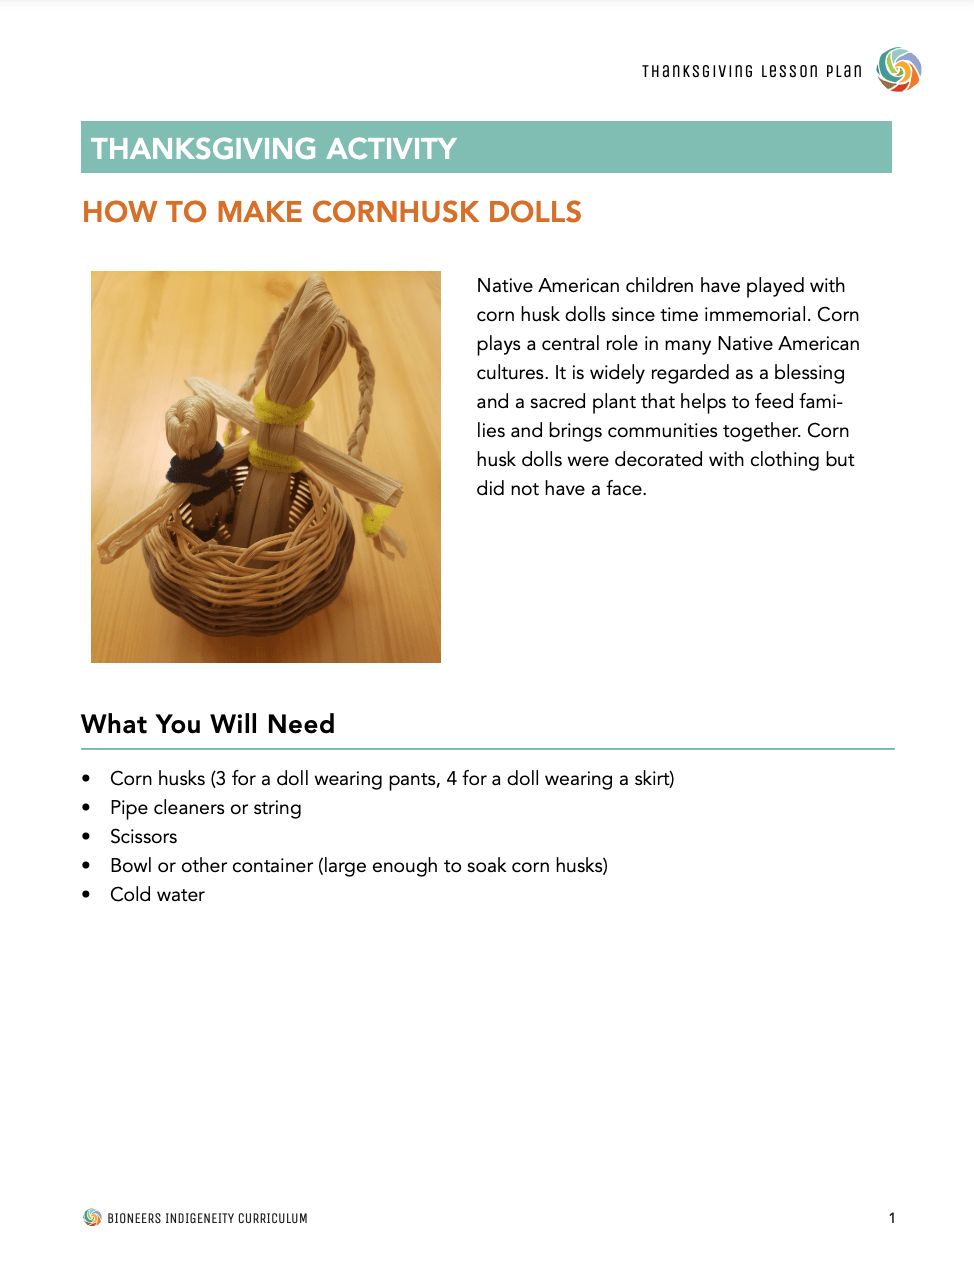 How to Make Corn Husk Dolls